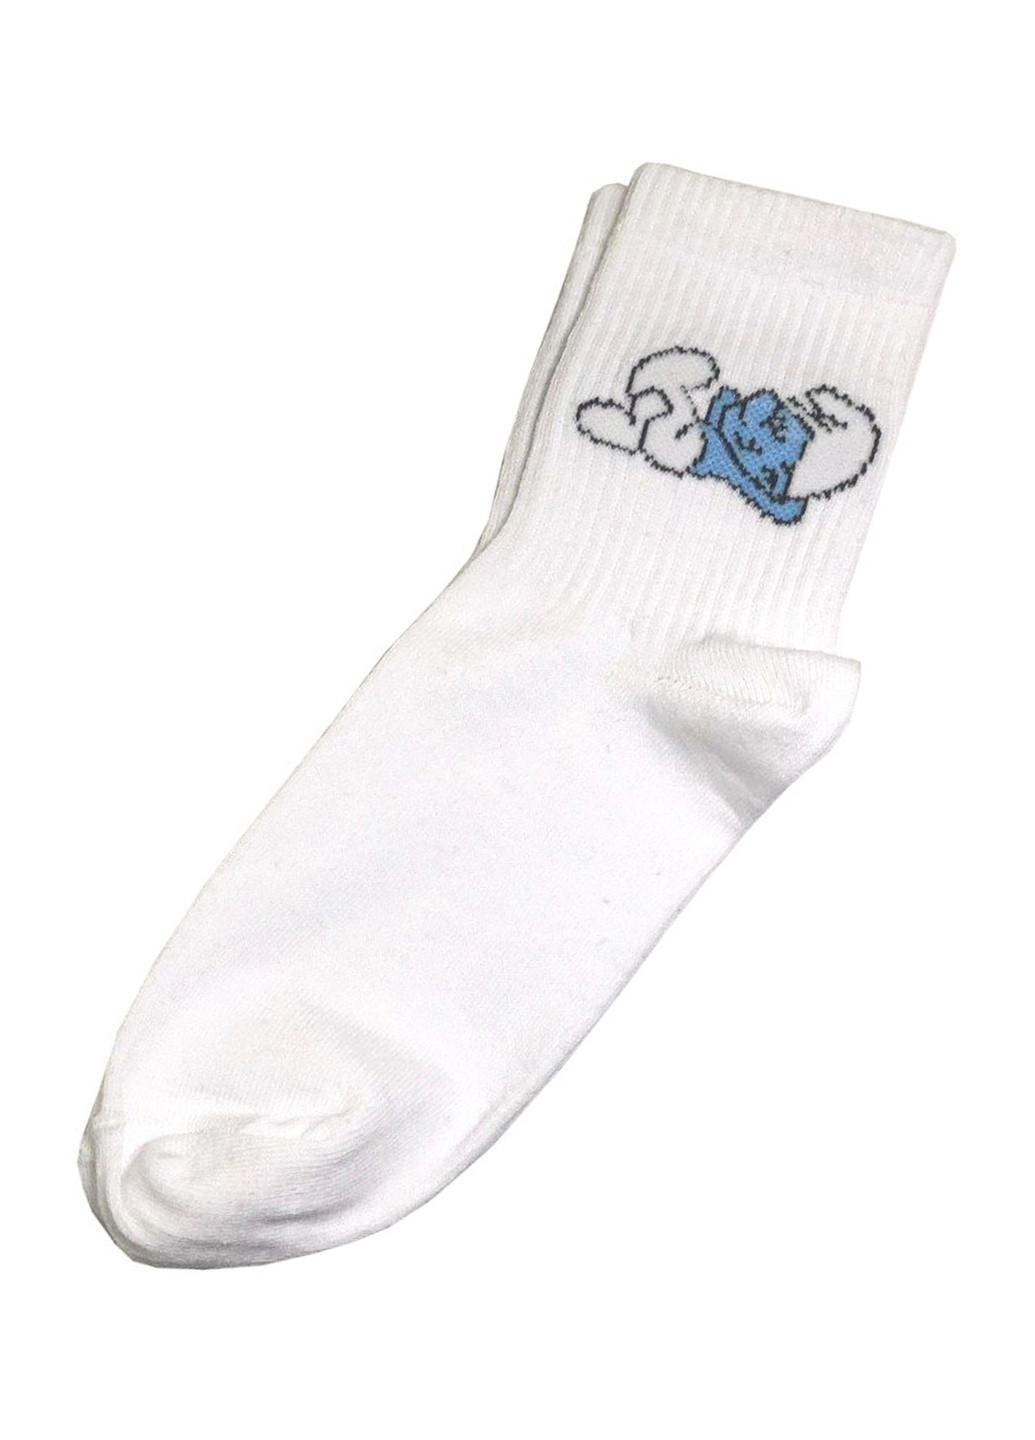 Шкарпетки Смурфик Rock'n'socks высокие (211258790)